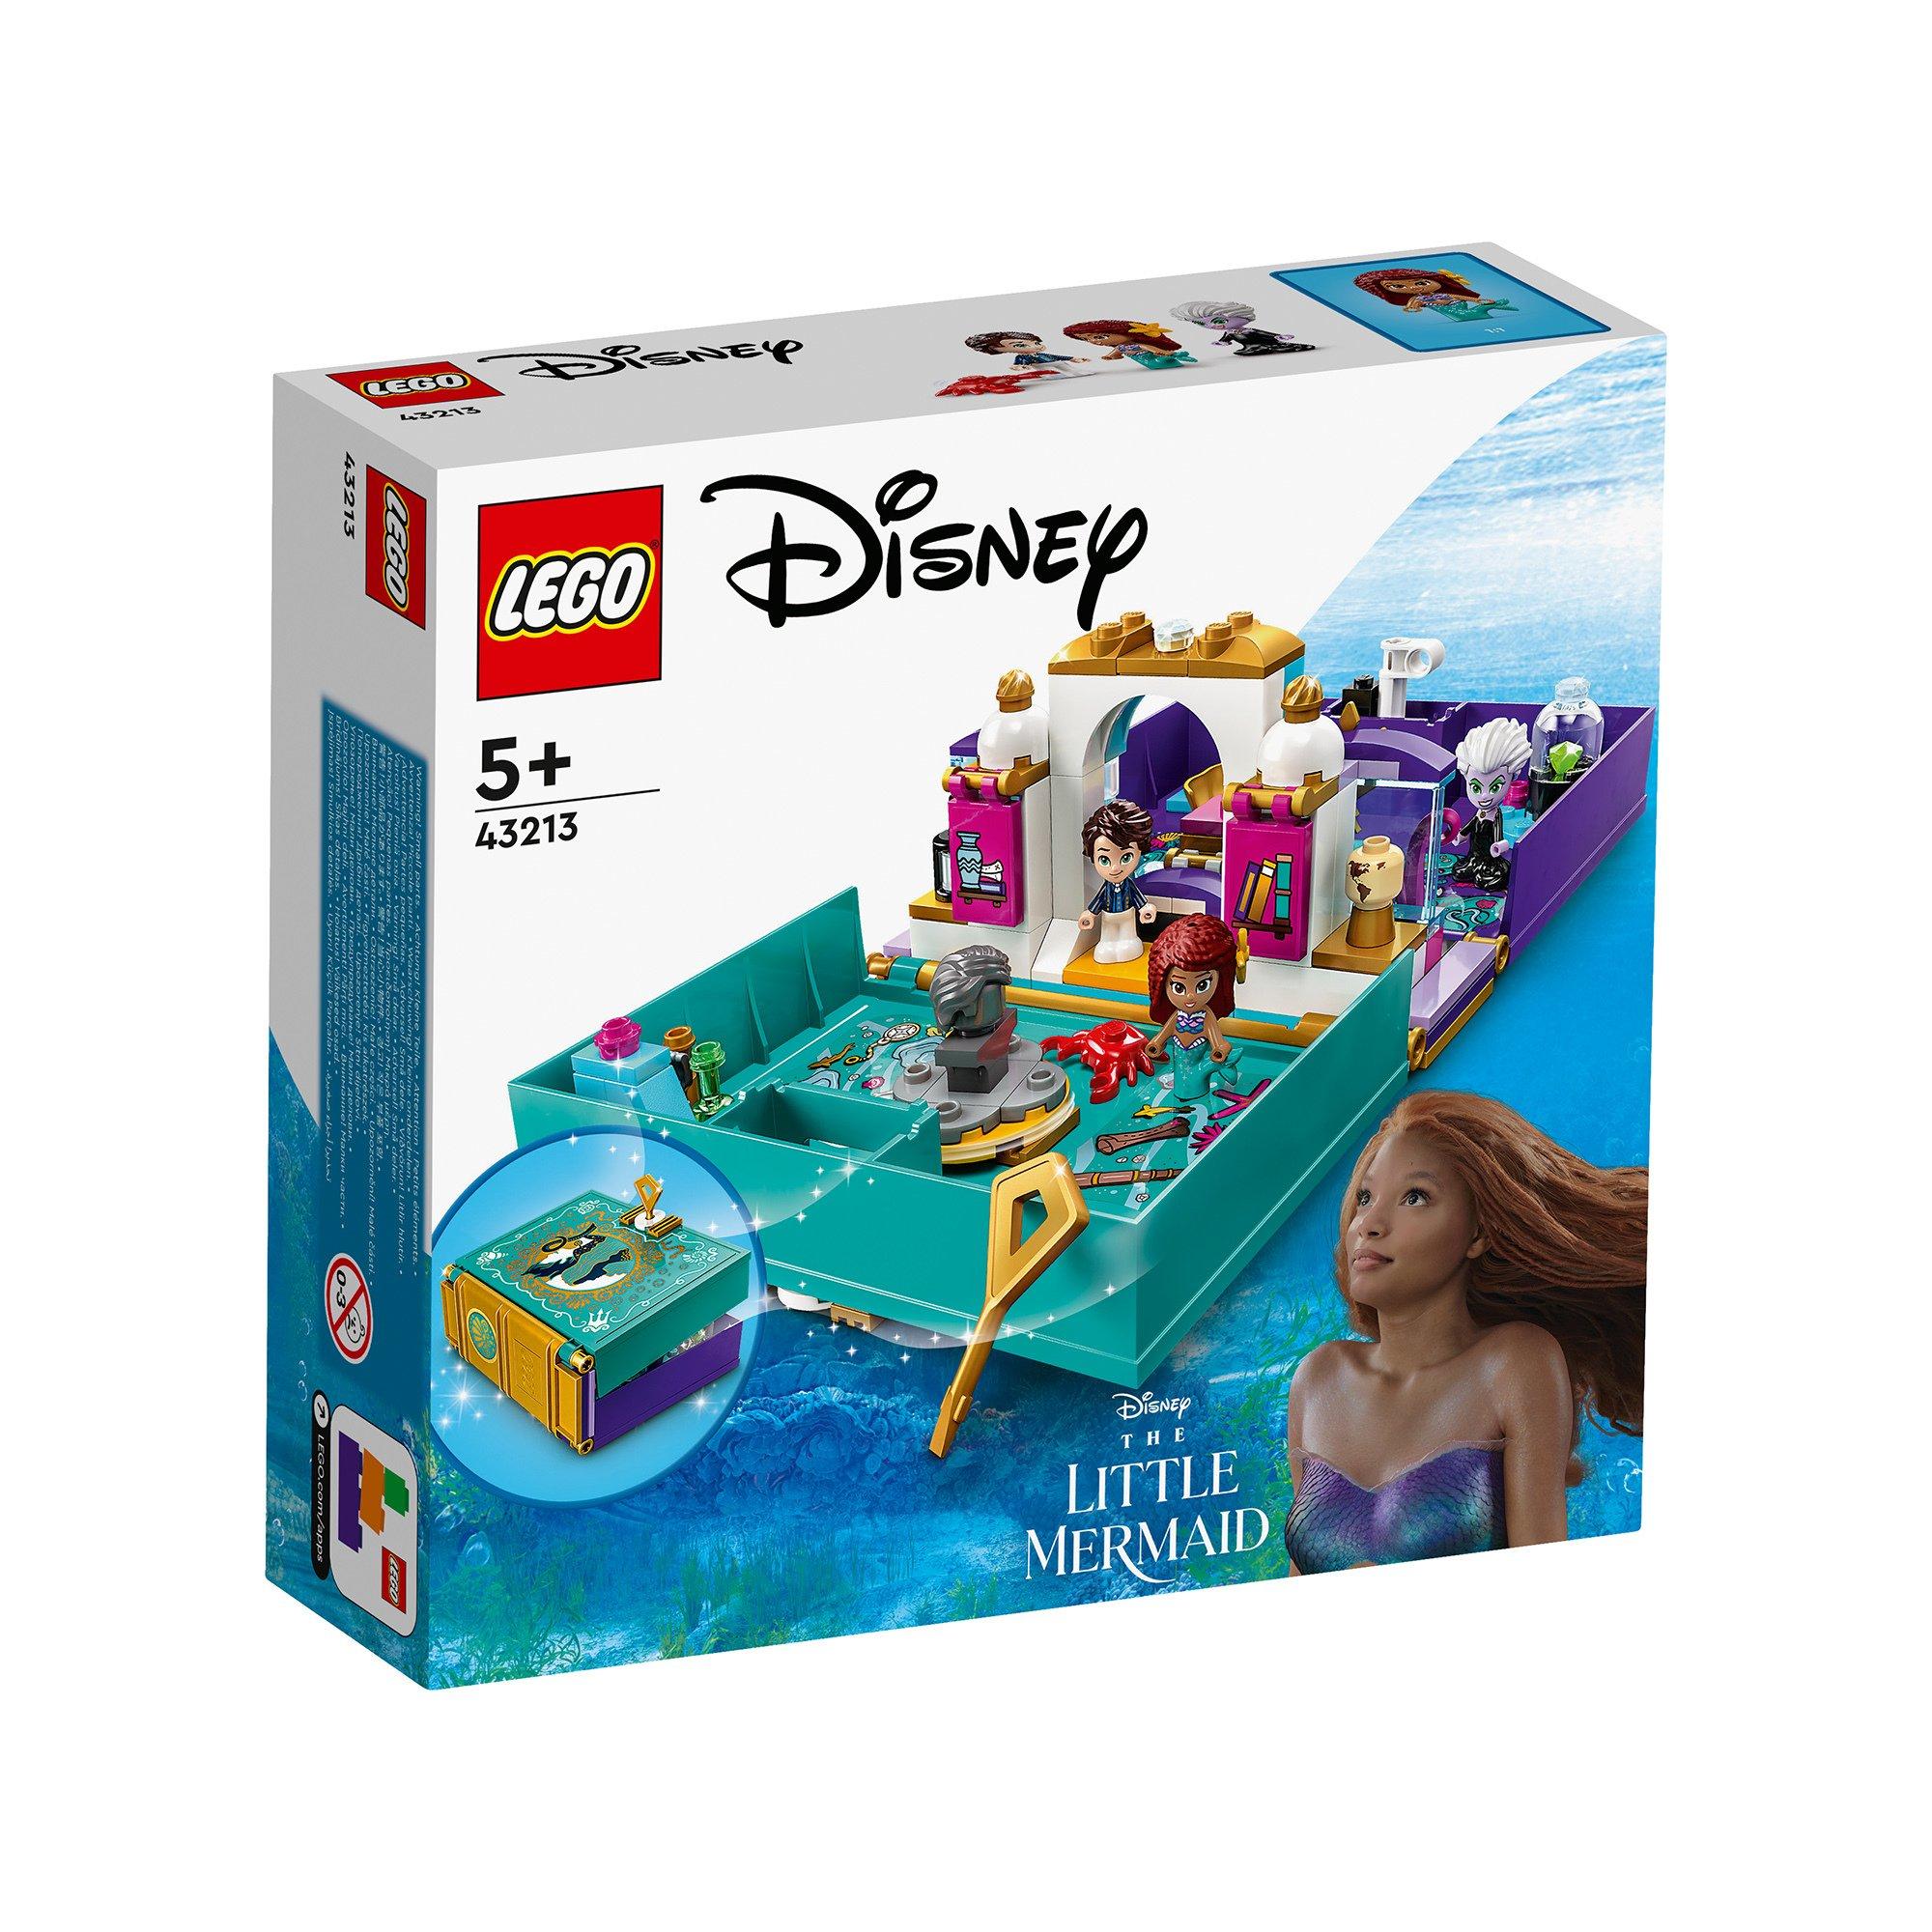 43246 LEGO Disney Princess Avventura al mercatoPrincipesse Disney – Full  Toys